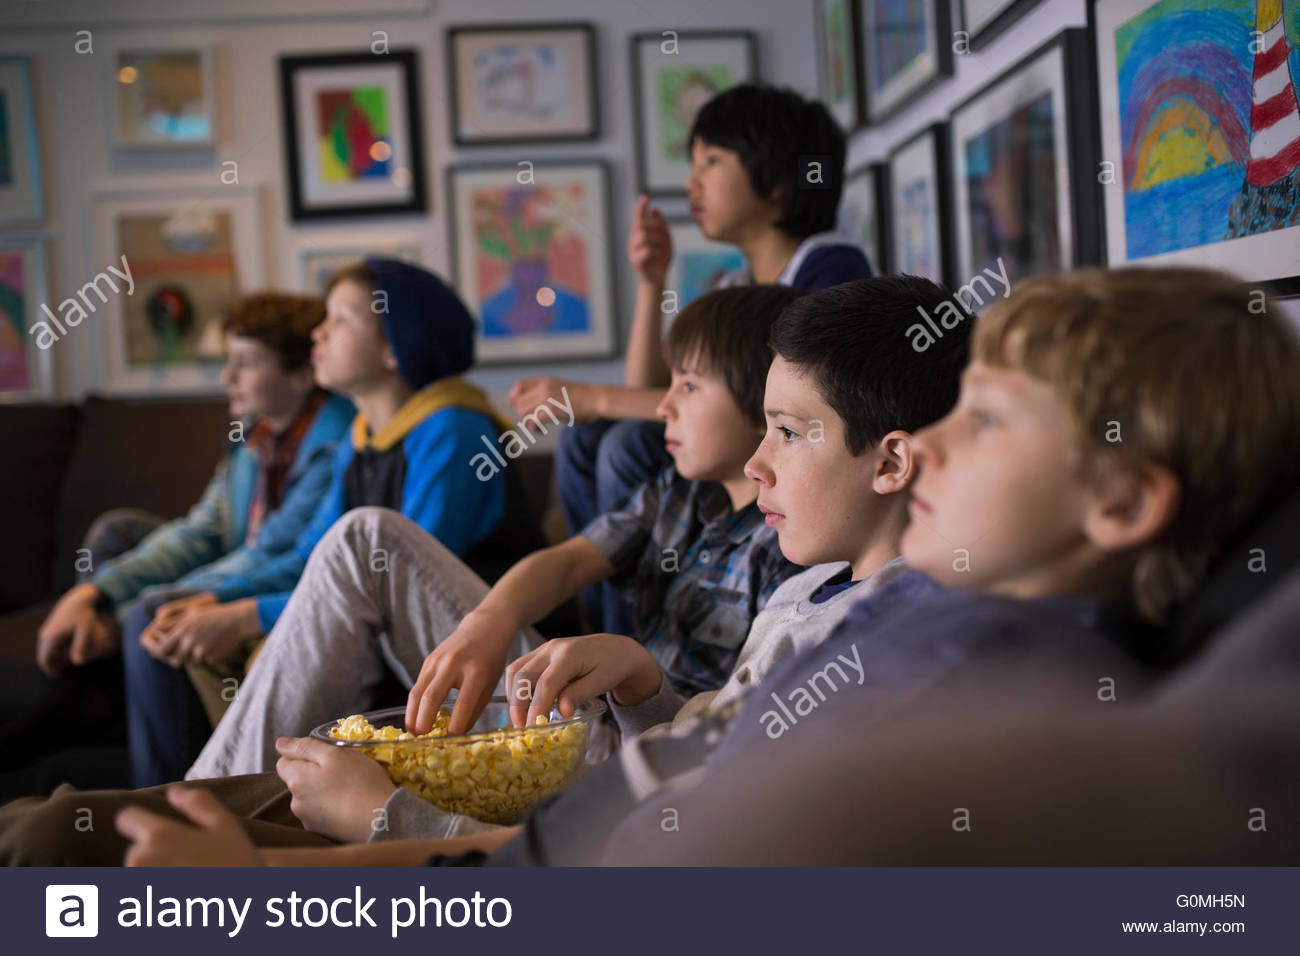 Boys eating popcorn watching TV living room sofa Stock Photo